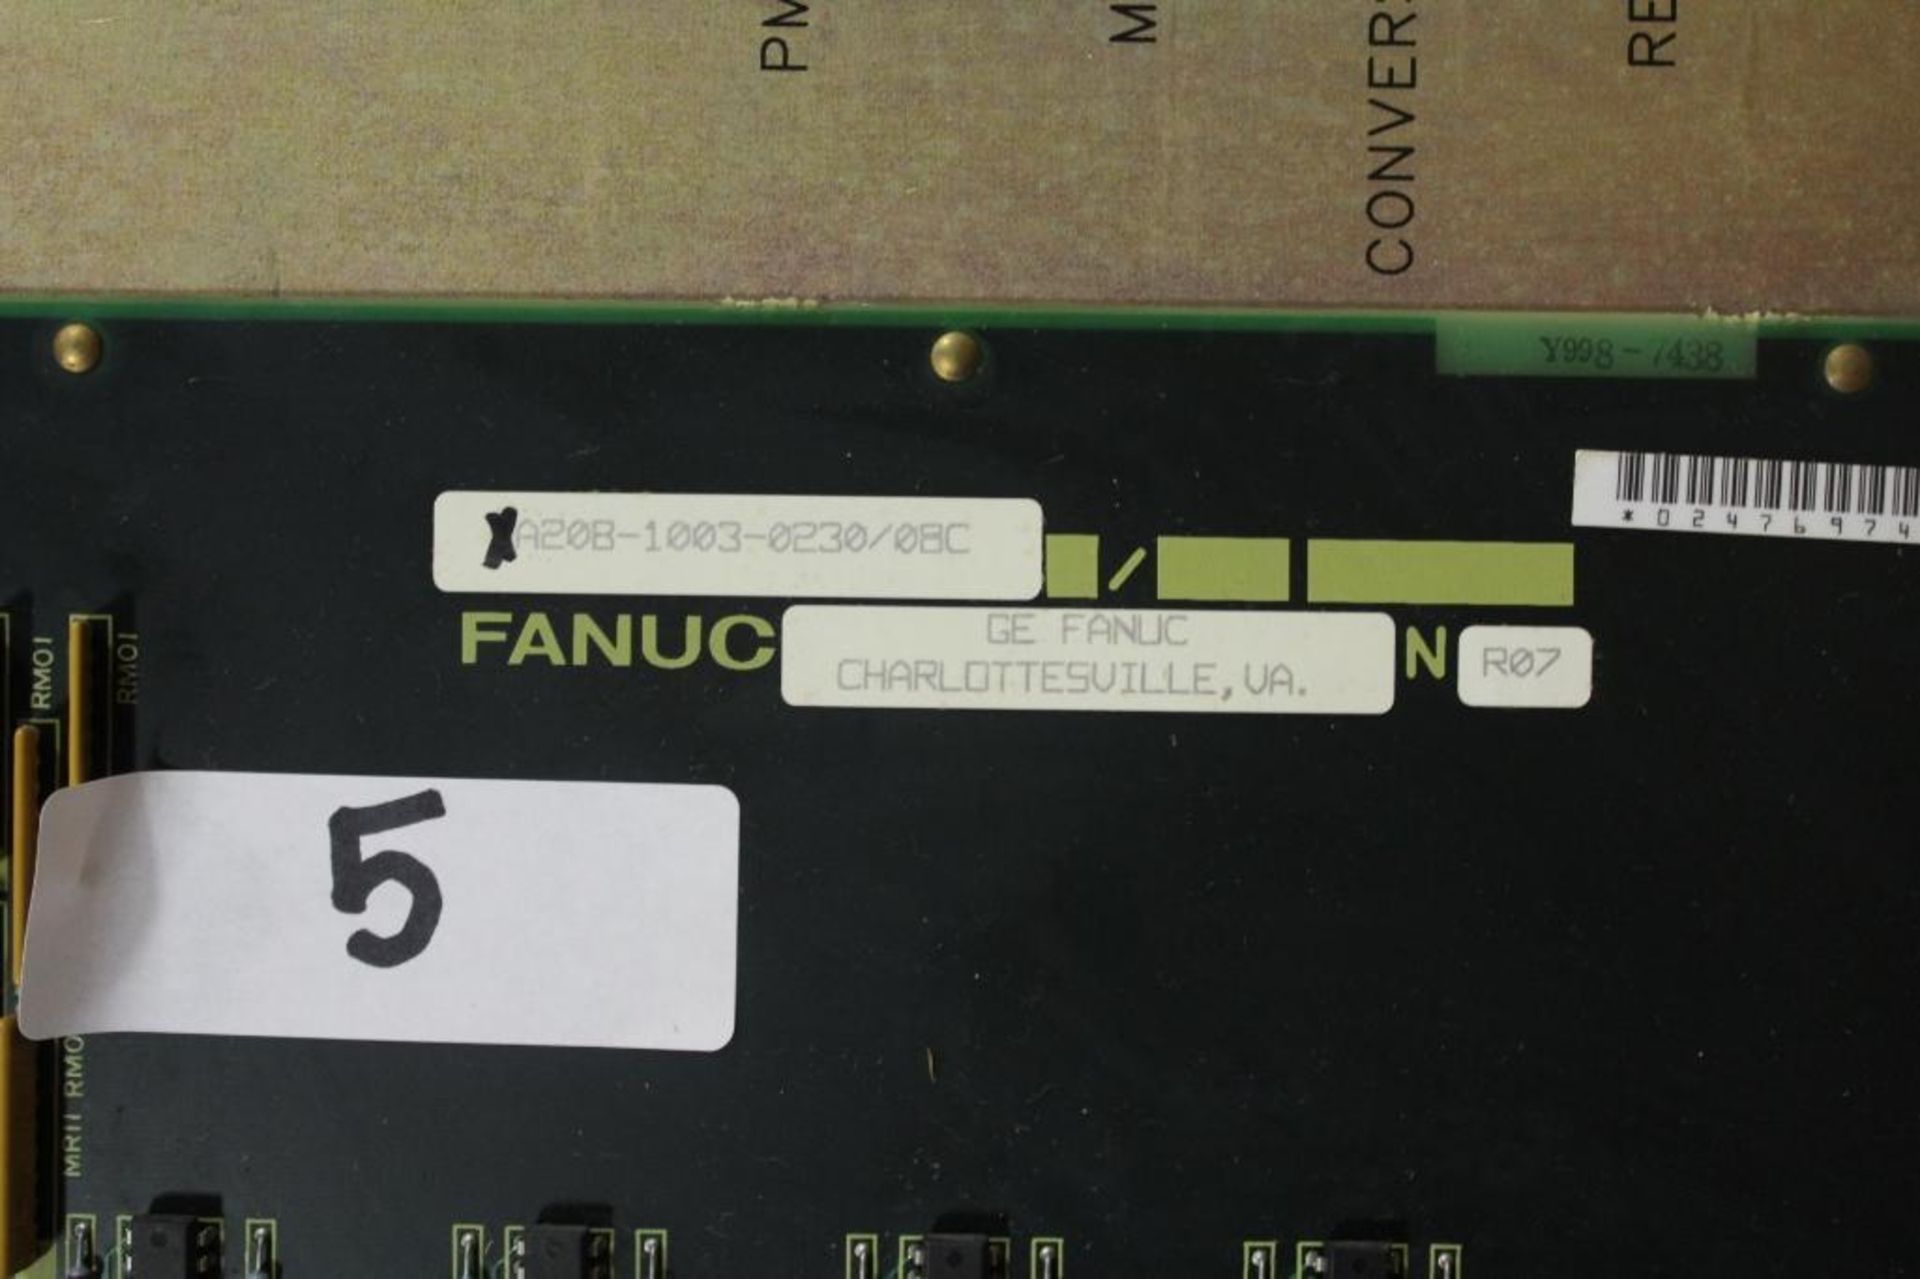 Fanuc A20B-1003-0230/08C Board - Image 2 of 2